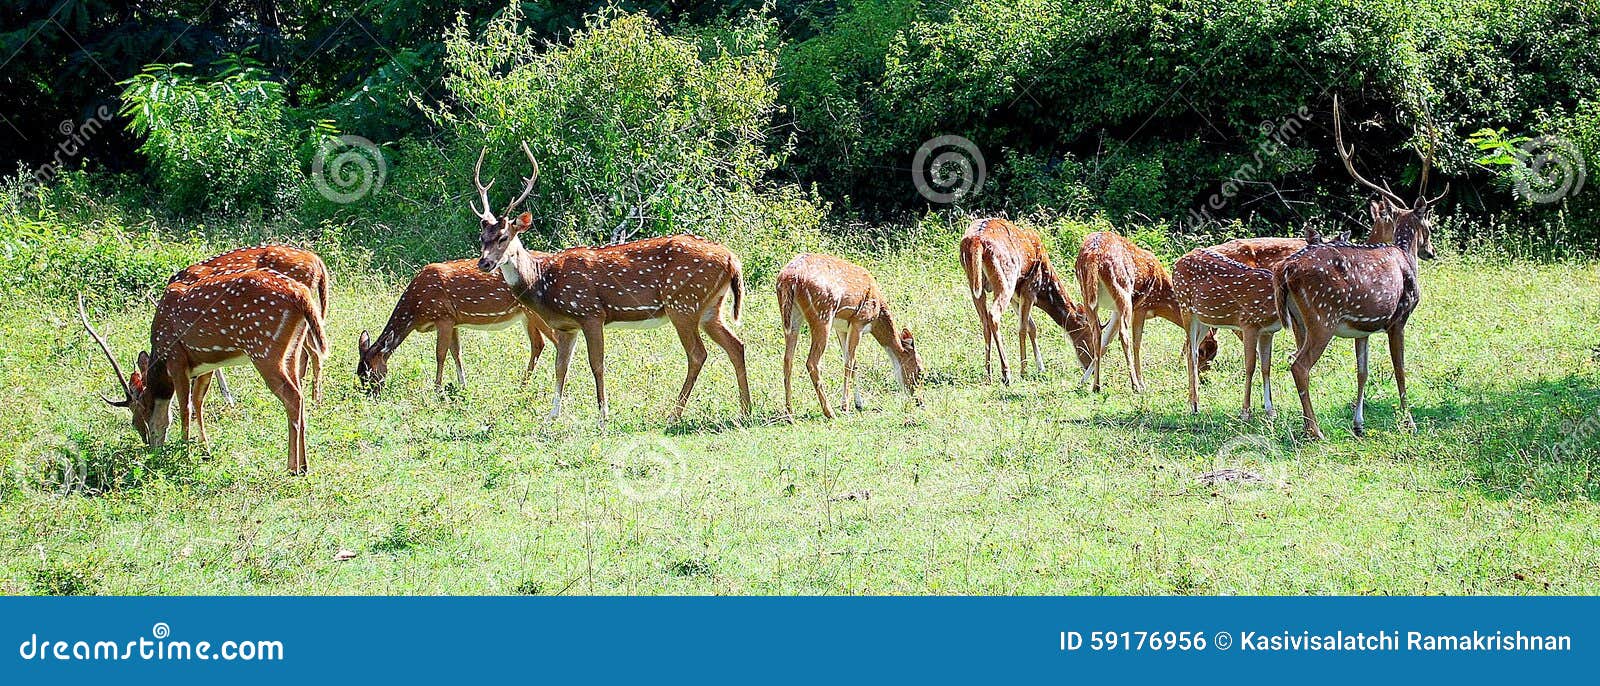 spotted deer in bandipur national park